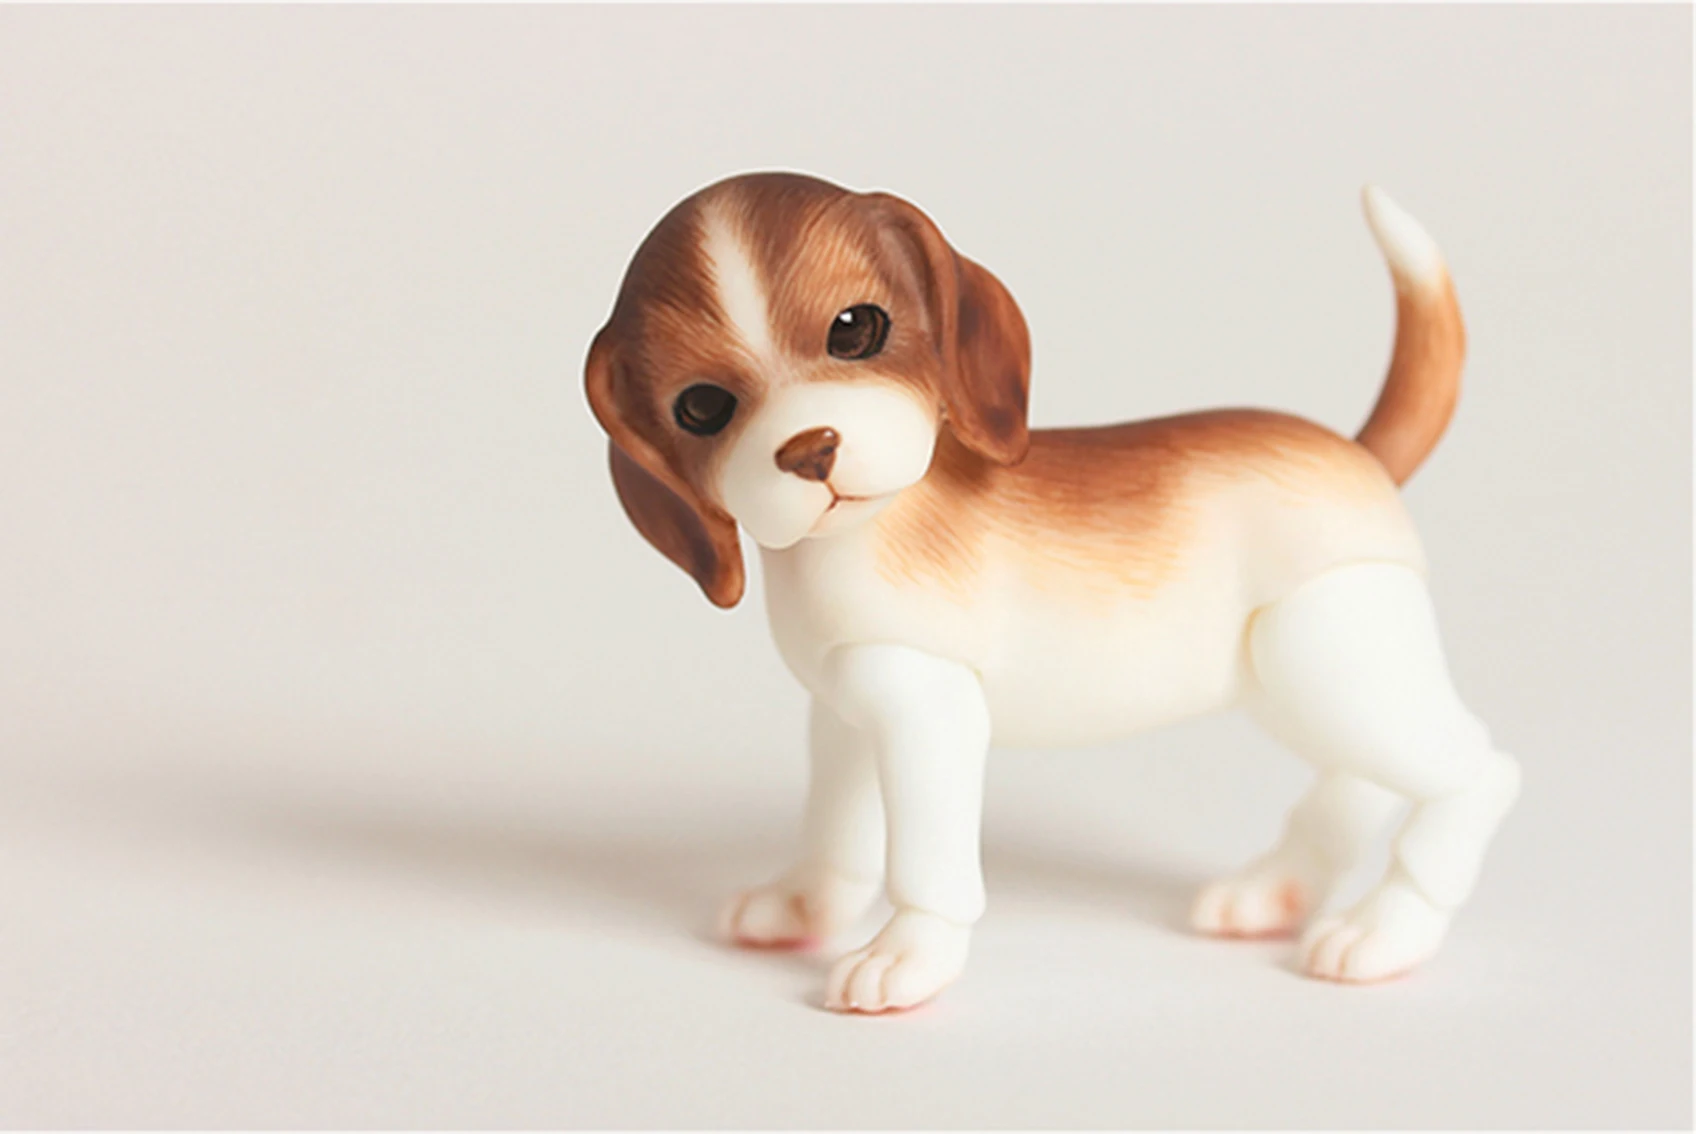 animal toy BJD Husky puppy dog doll 